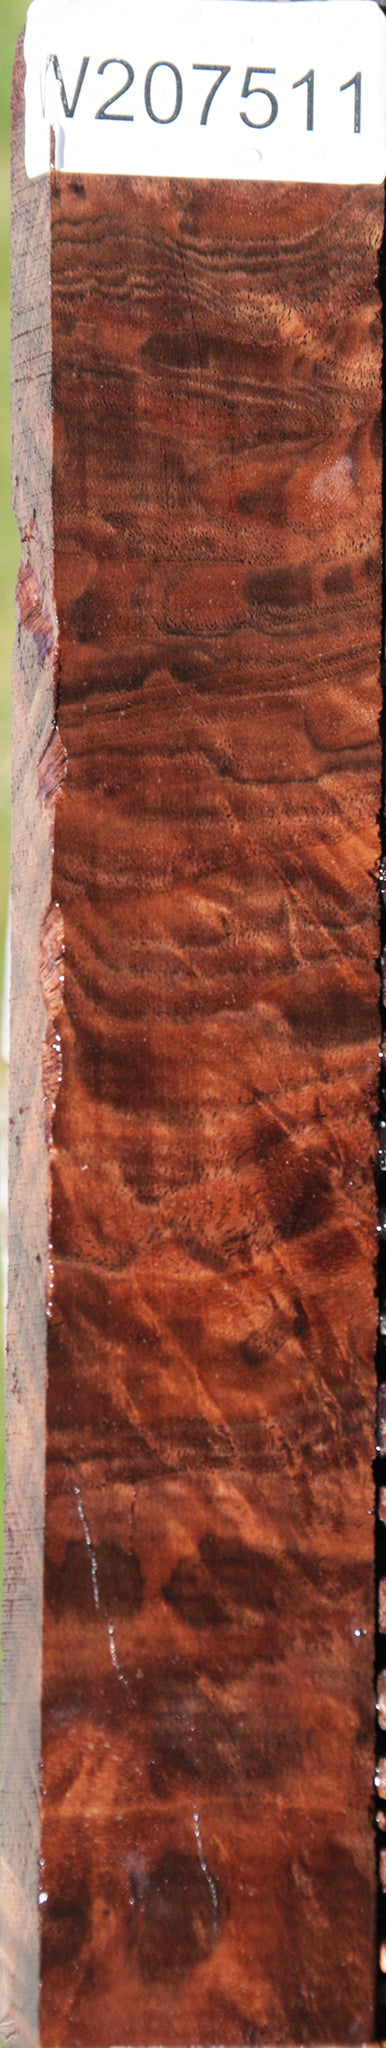 Crotchwood Claro Walnut Lumber